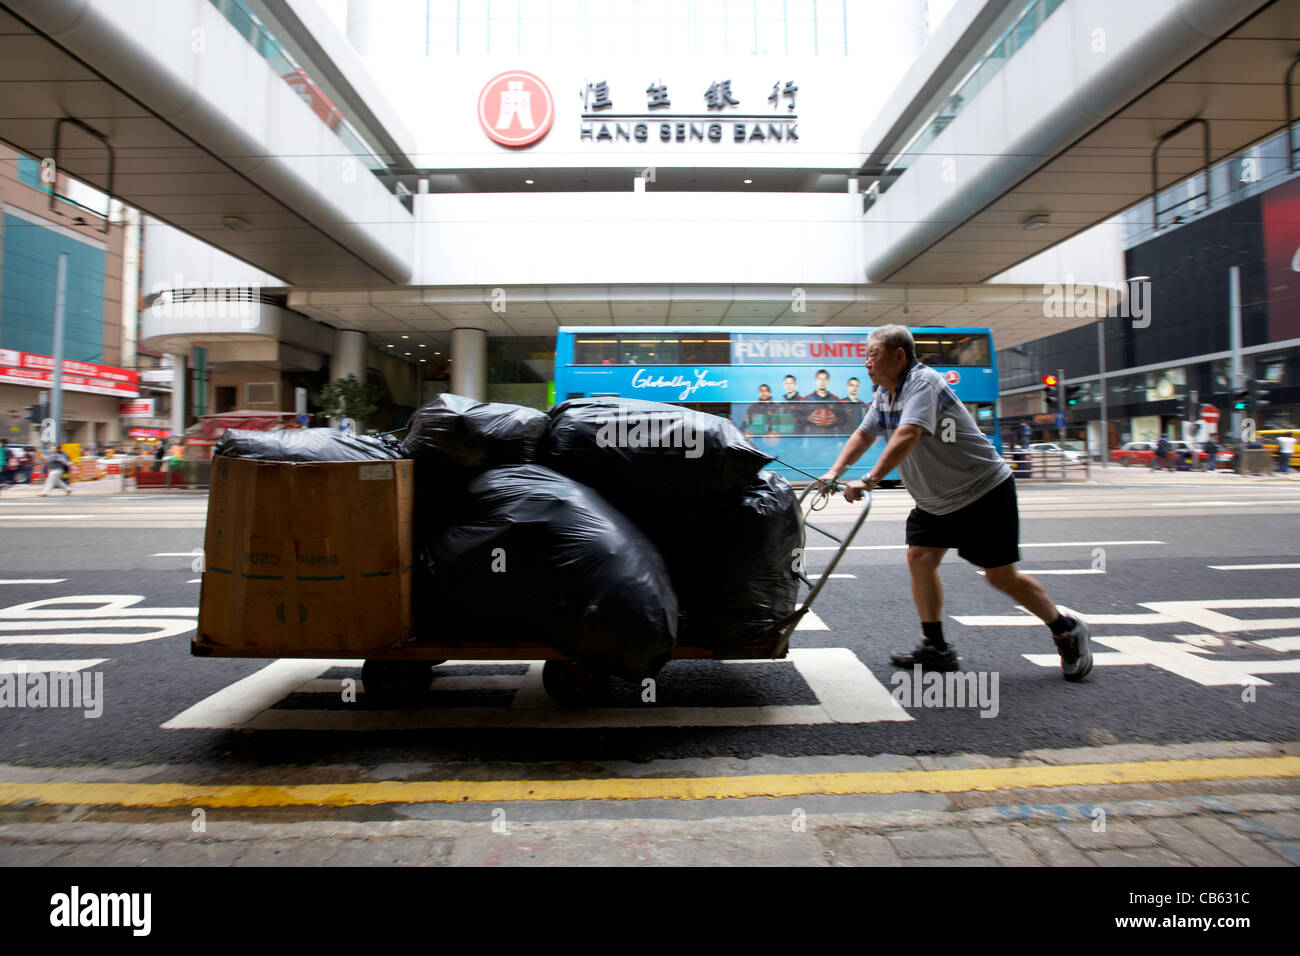 L'uomo spinge il carrello consegna passato Hang Seng bank hq central district, isola di Hong kong, RAS di Hong Kong, Cina deliberata di sfocatura del movimento Foto Stock